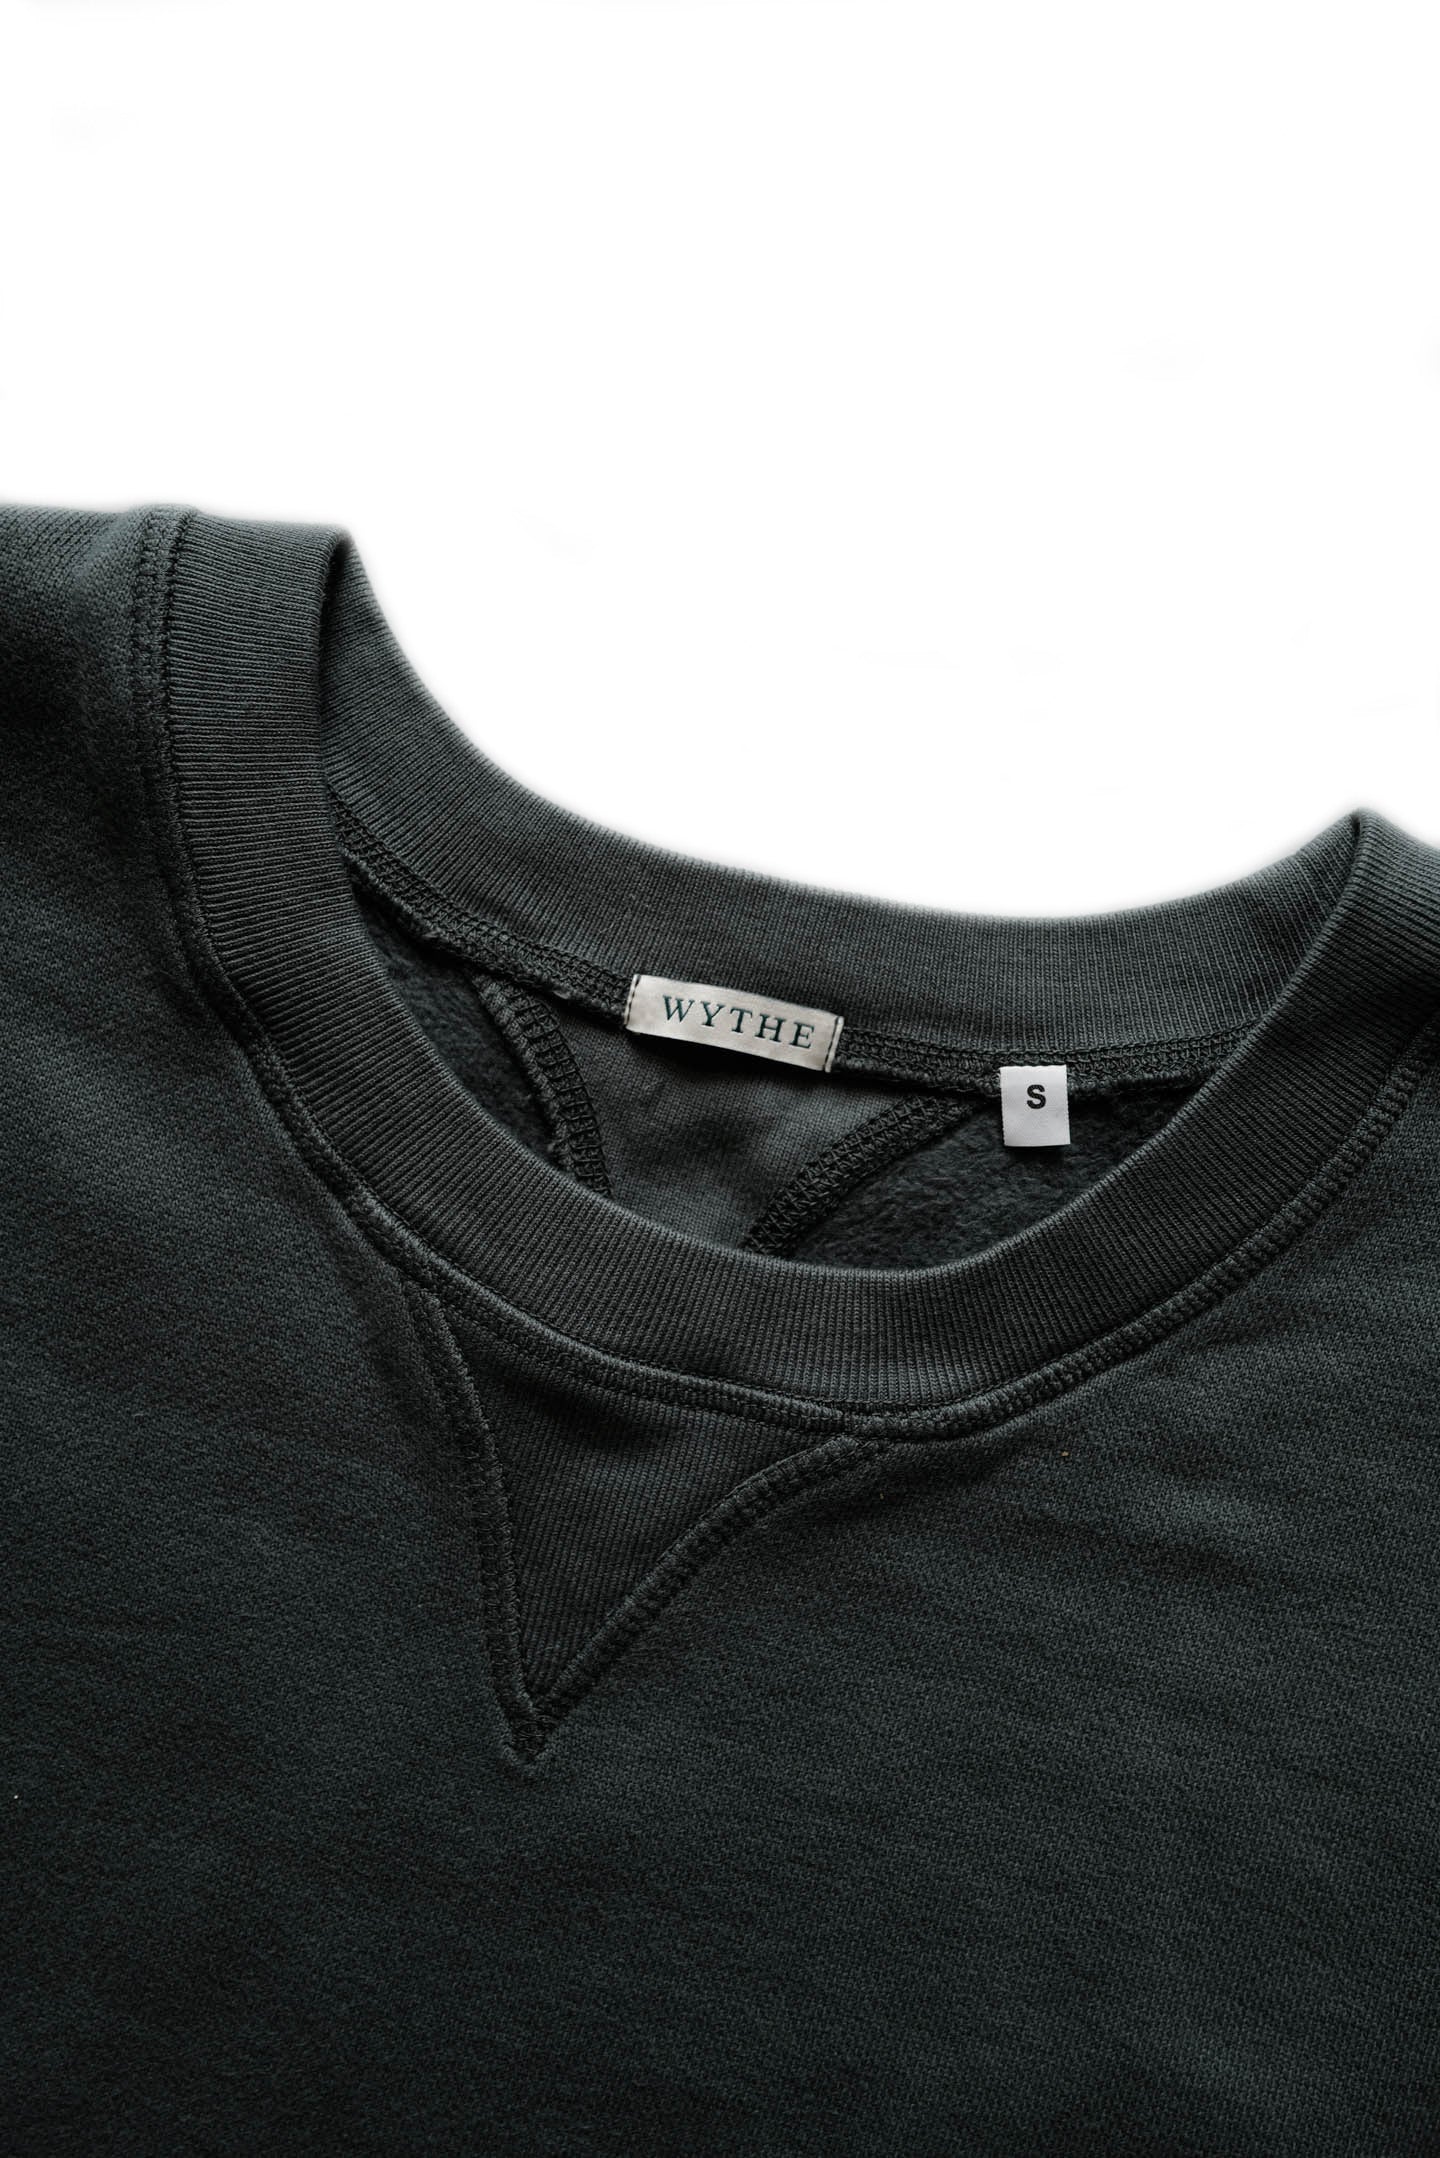 Wythe - Crewneck Sweatshirt - Faded Black